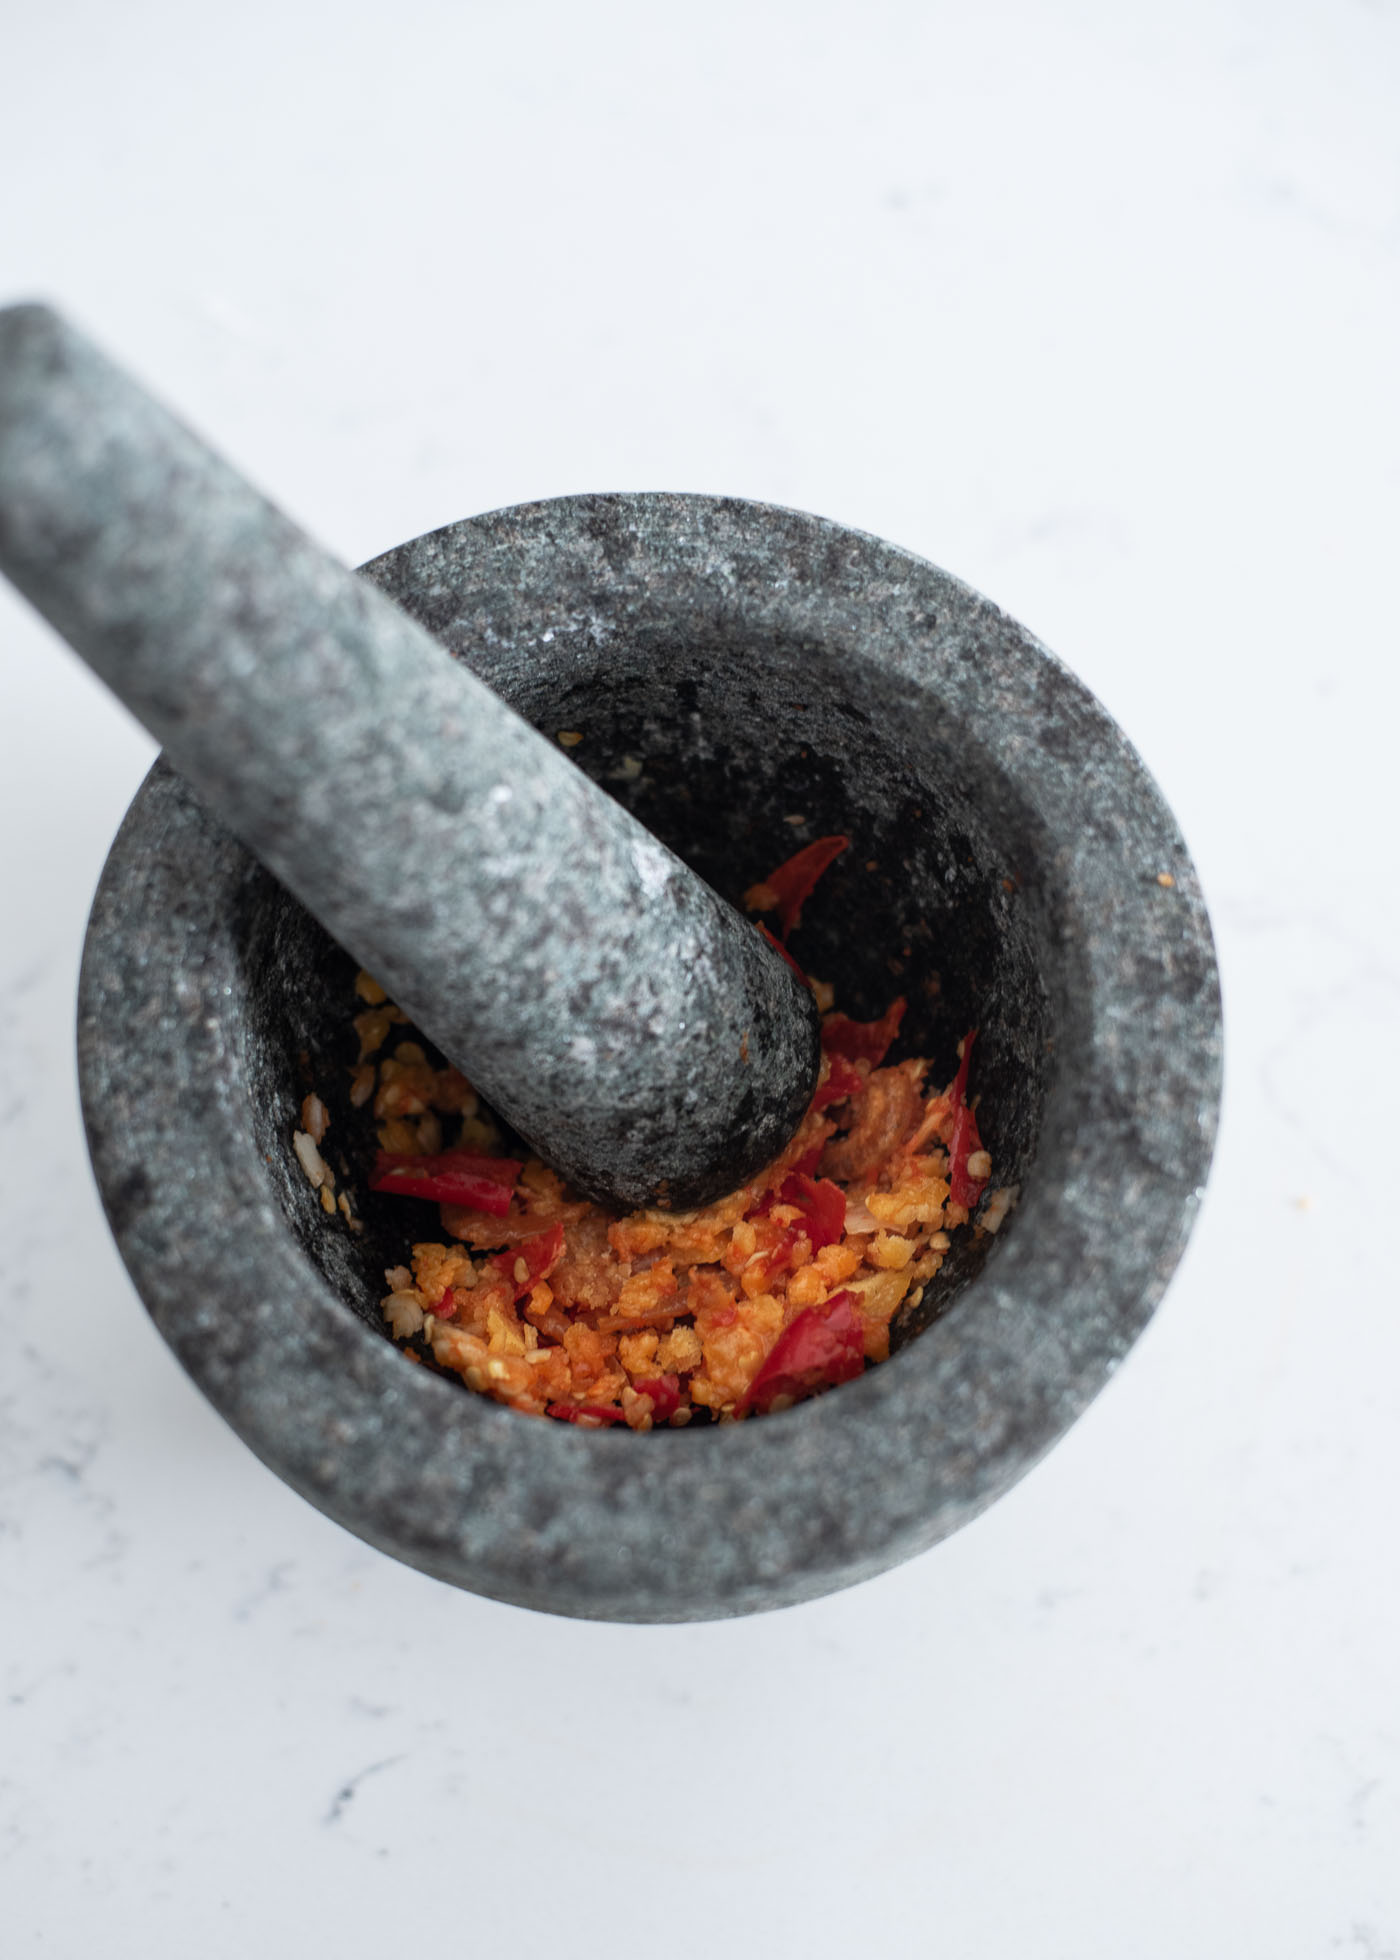 Garlic and red chili pounded in a mortar to make som tam (Thai papaya salad)